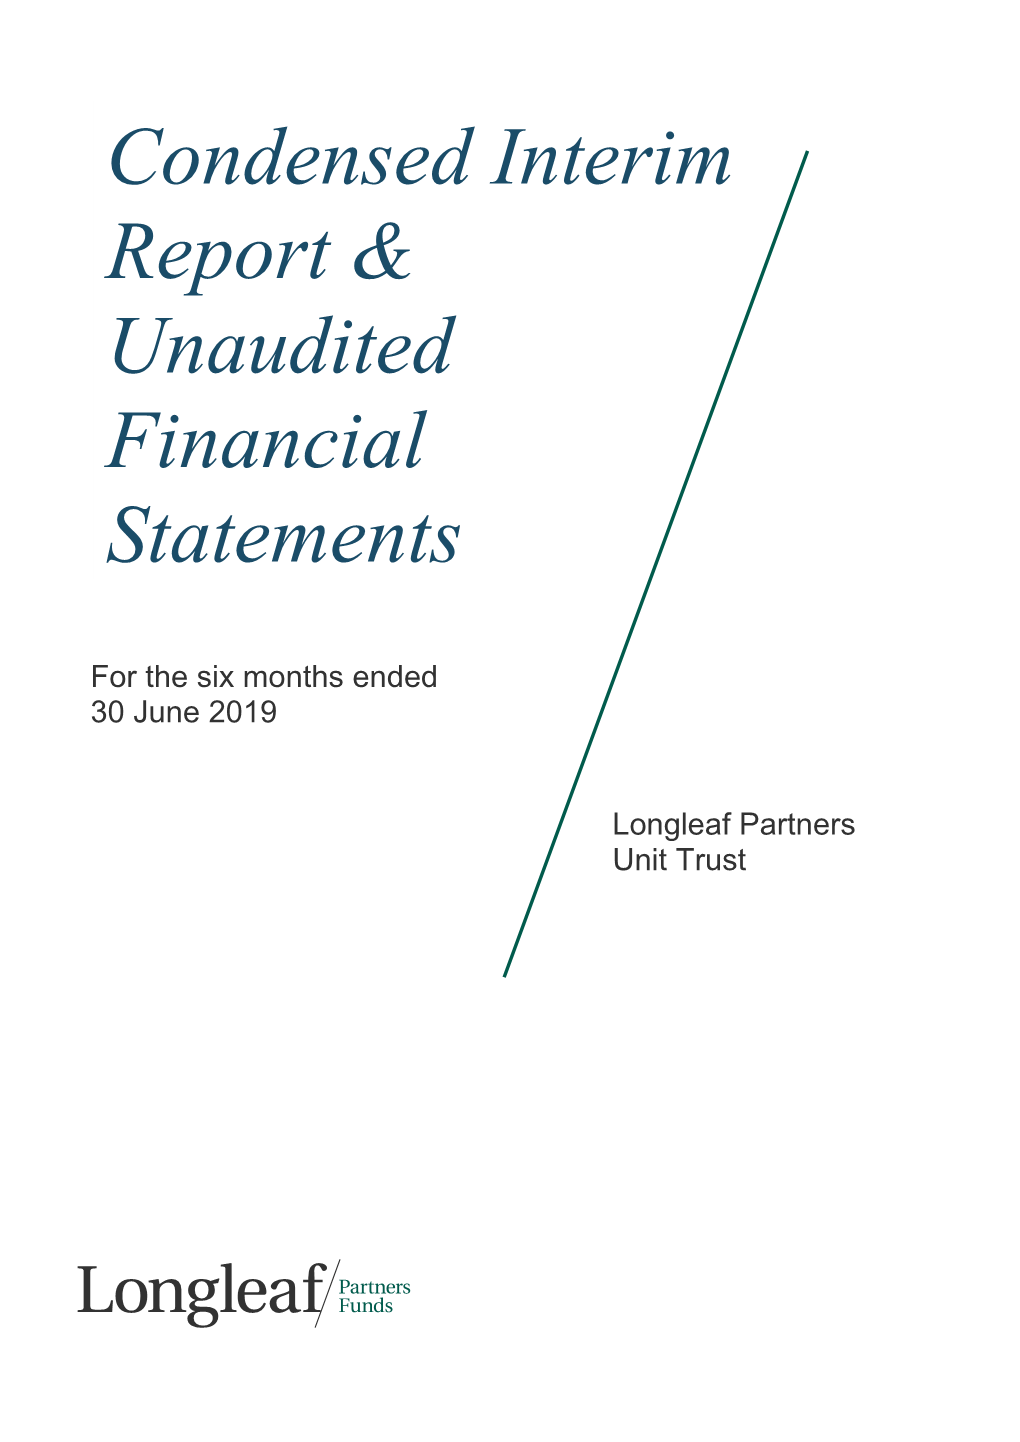 Condensed Interim Report & Unaudited Financial Statements